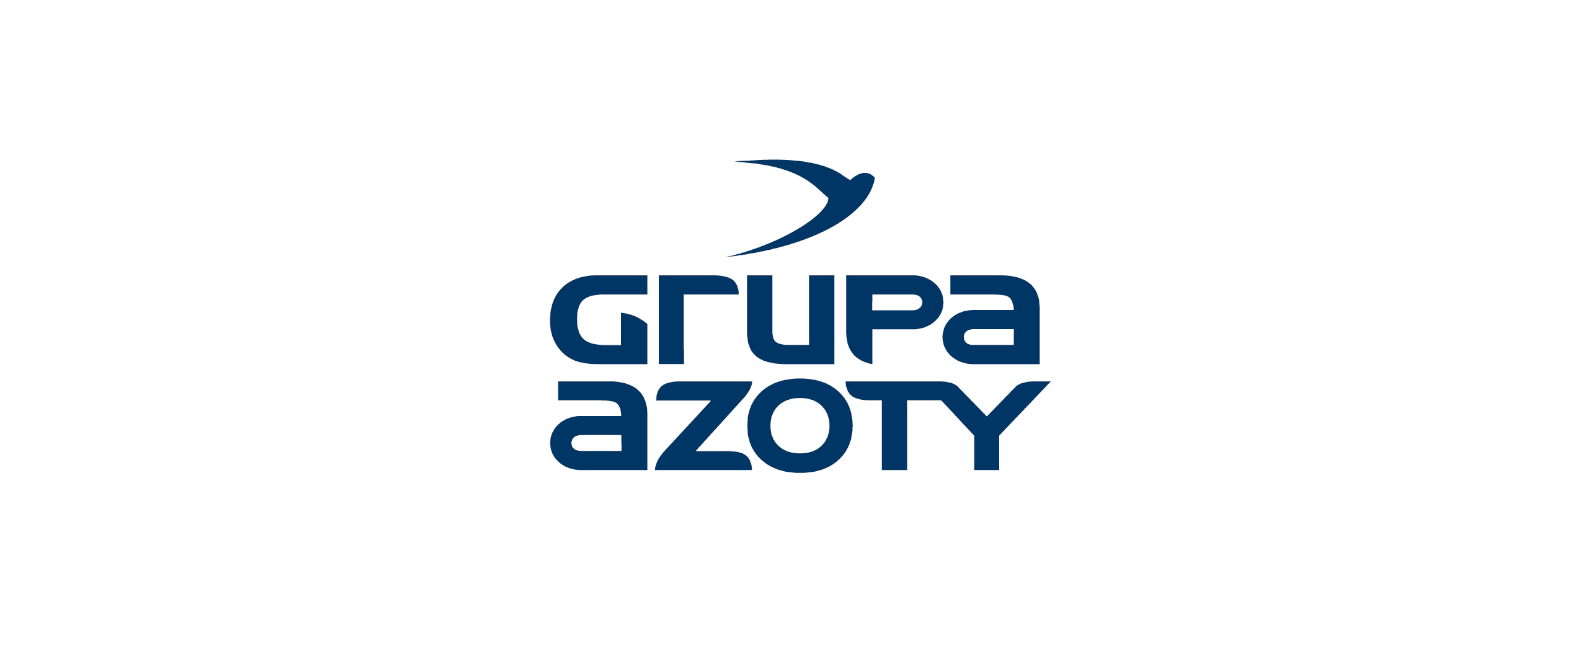 Changes on Grupa Azoty Polyolefins Management Board